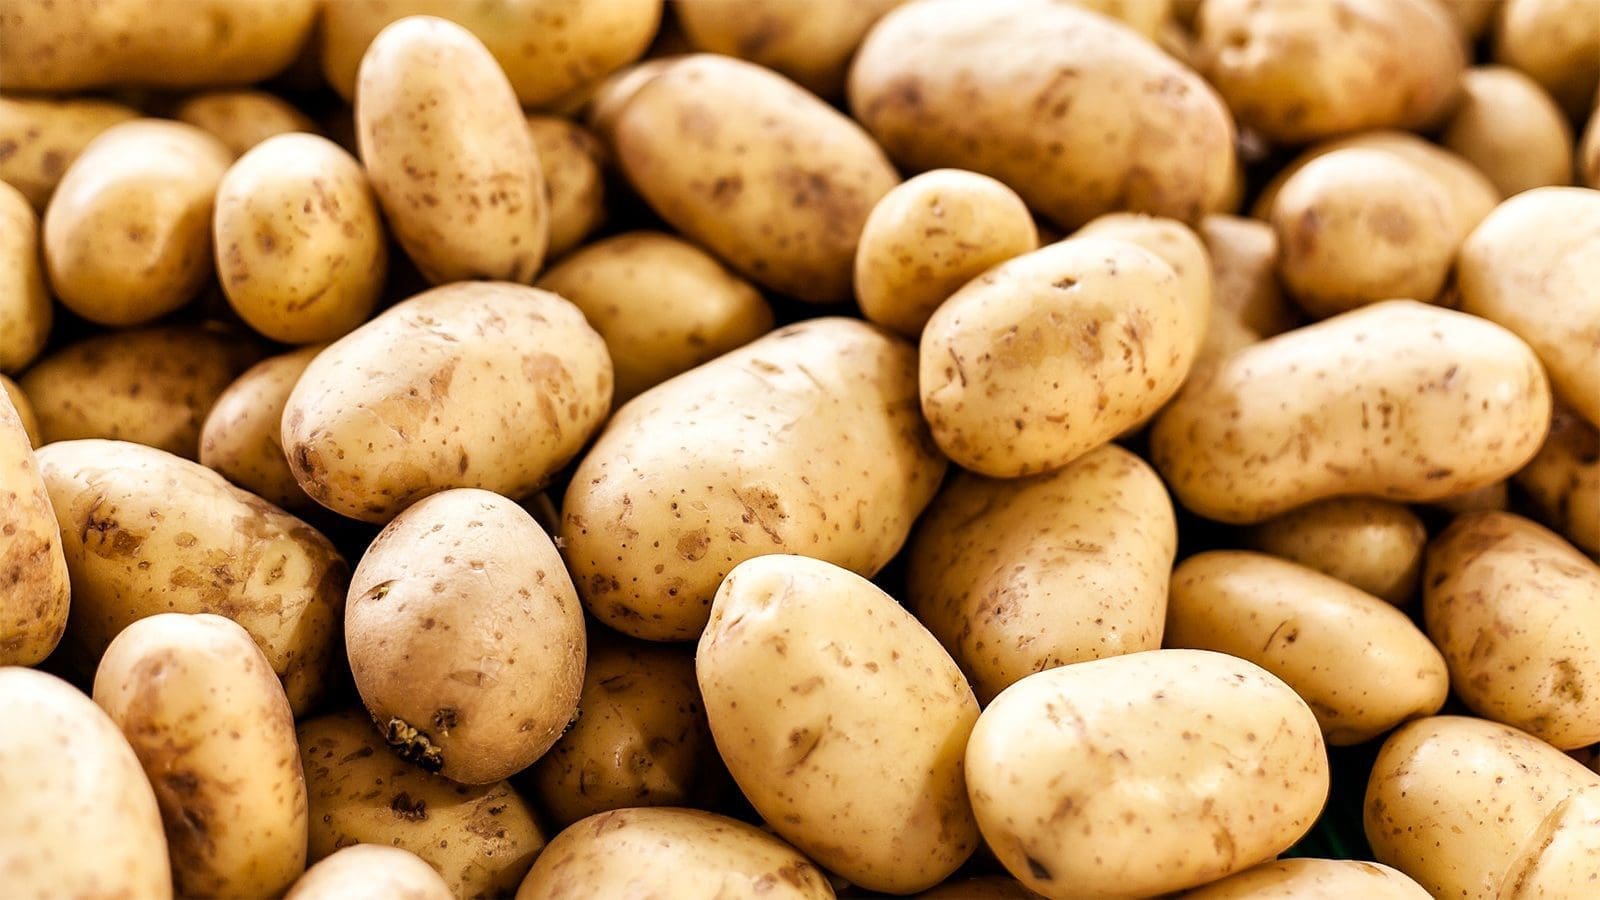 International Potato Center creates blight-resistant potato varieties